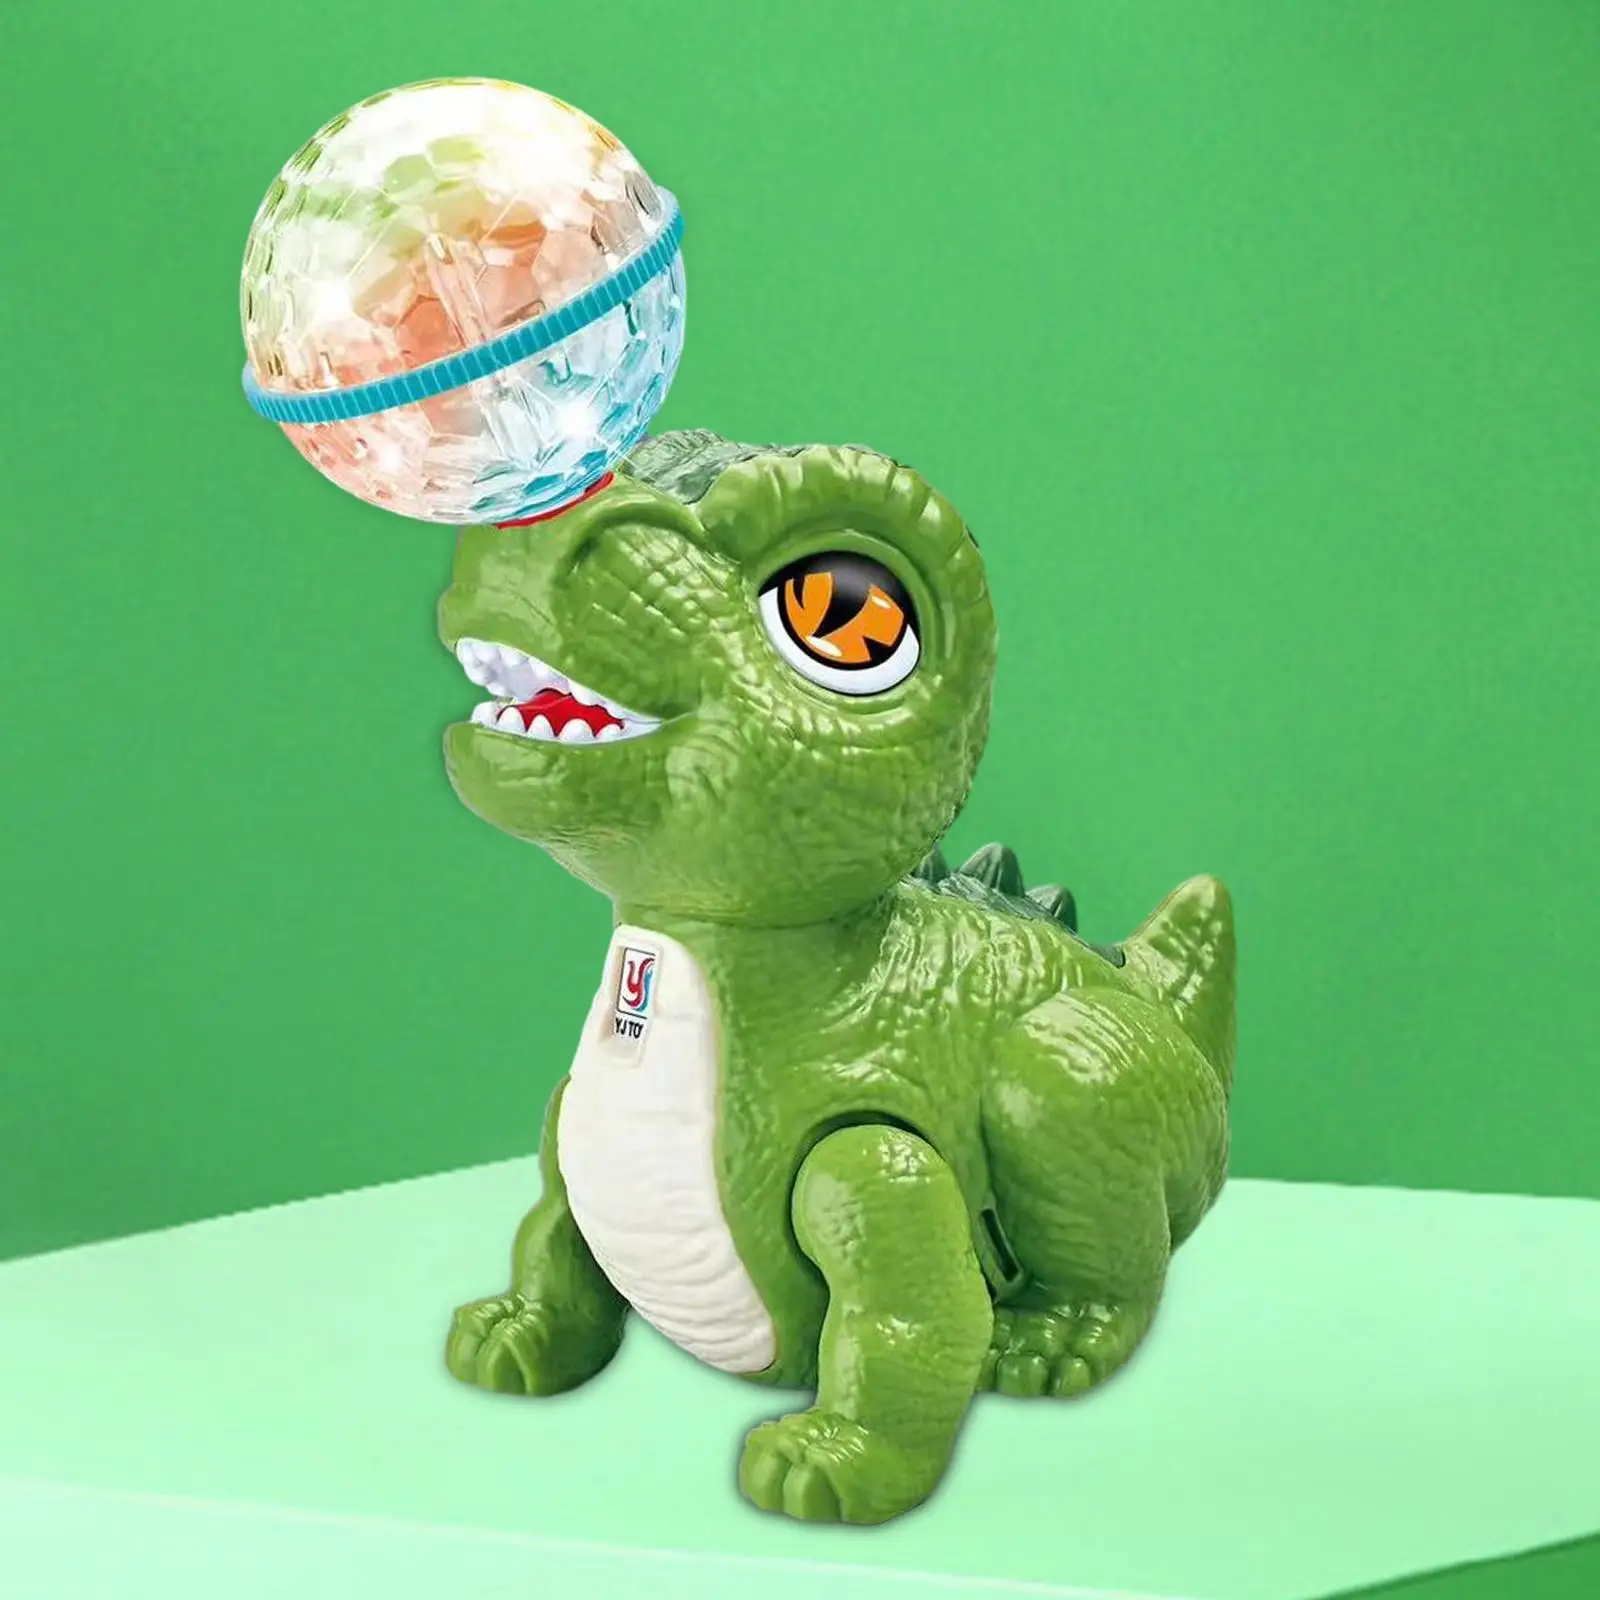 Dinosaur Toys with Light Music Body Balance Forward Rotating for Running Birthday Chasing Early Education Preschool